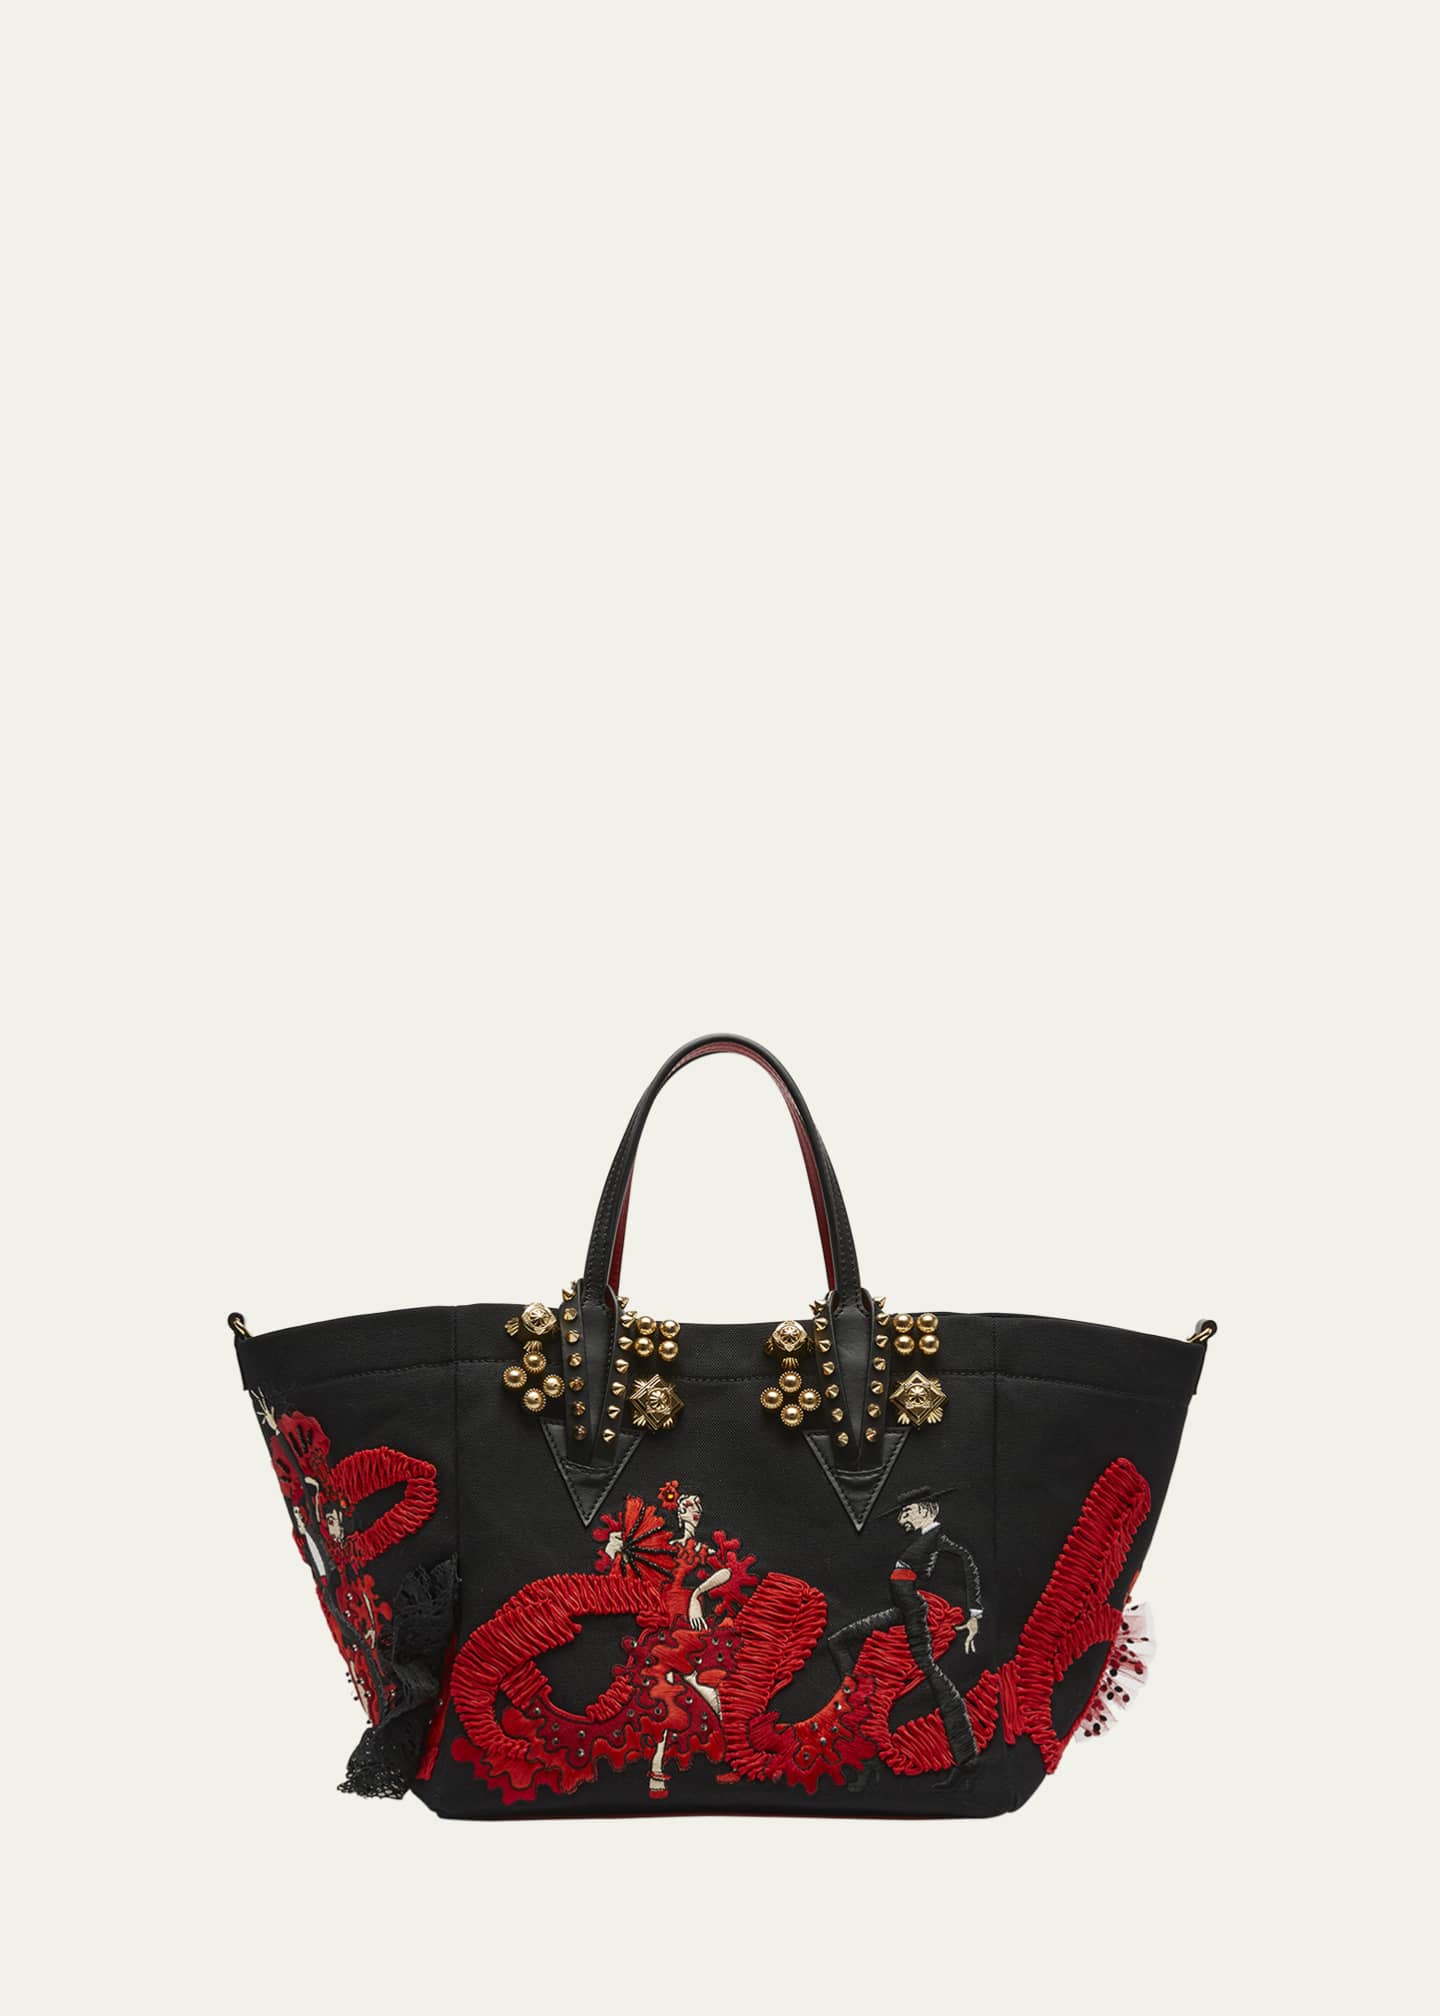 Christian Louboutin Small Flamencaba Embroidered Tote Bag